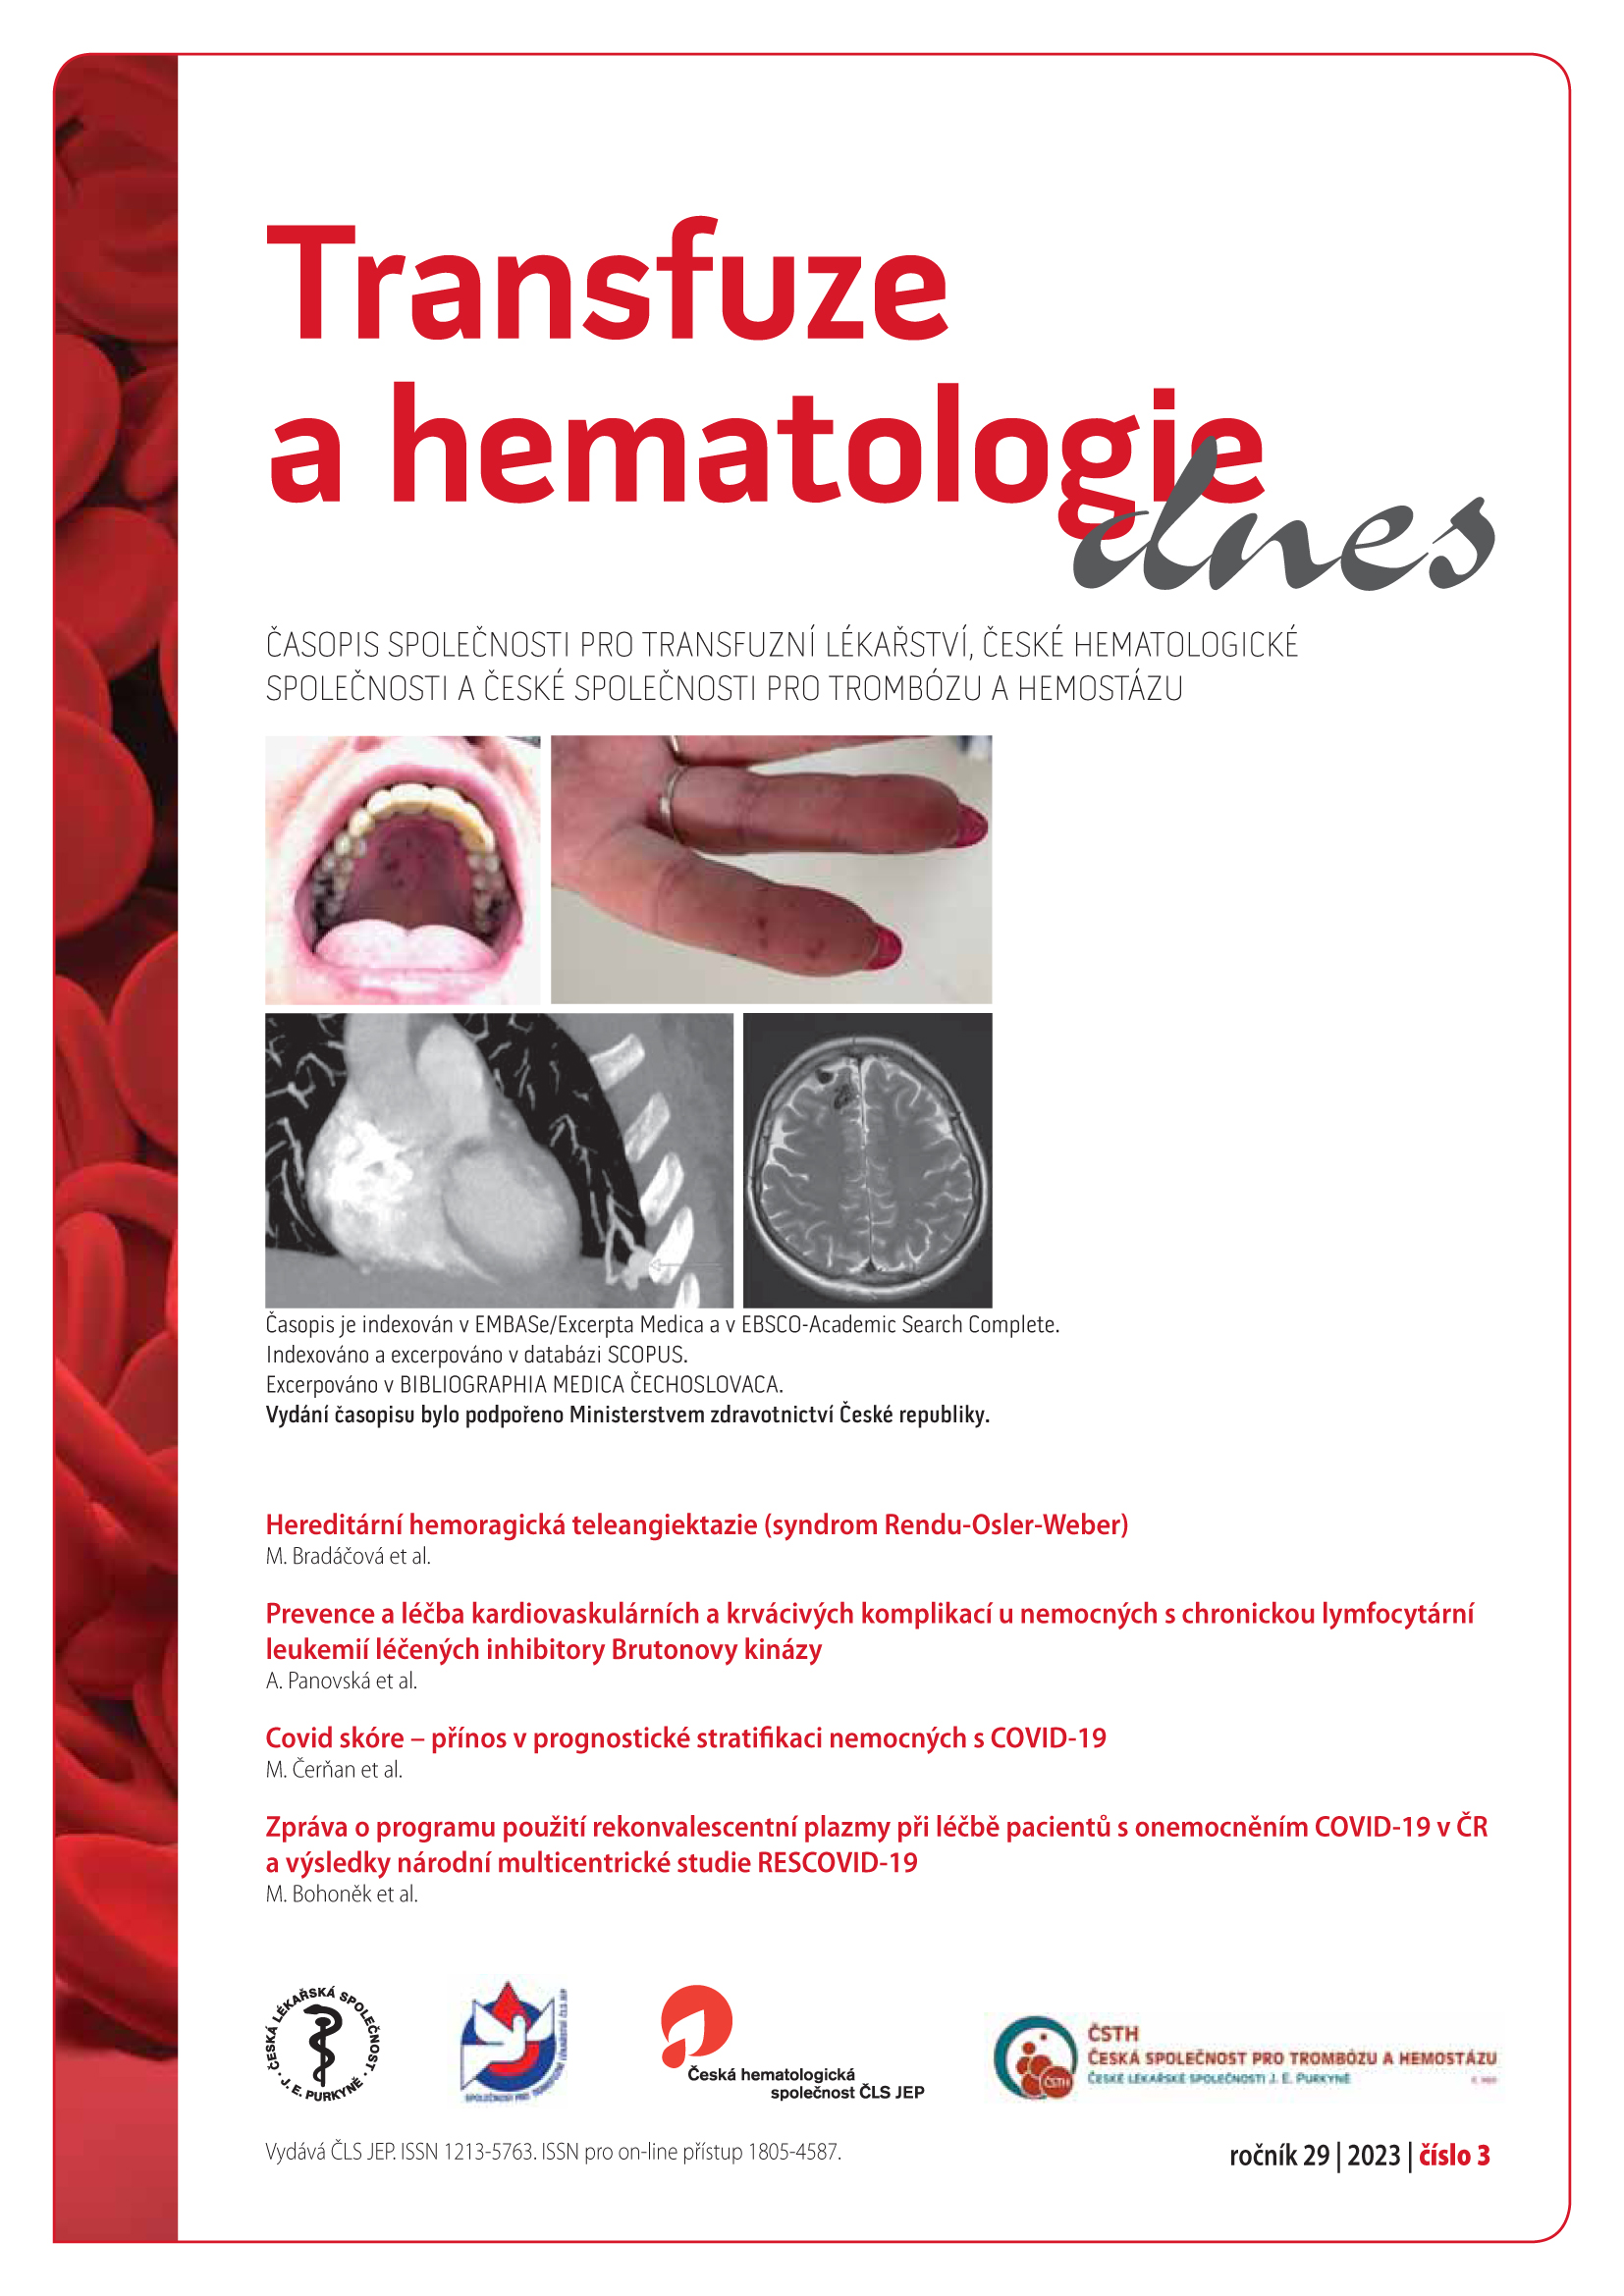 					Náhled Vol 29 No 3 (2023): Transfuze a hematologie dnes
				